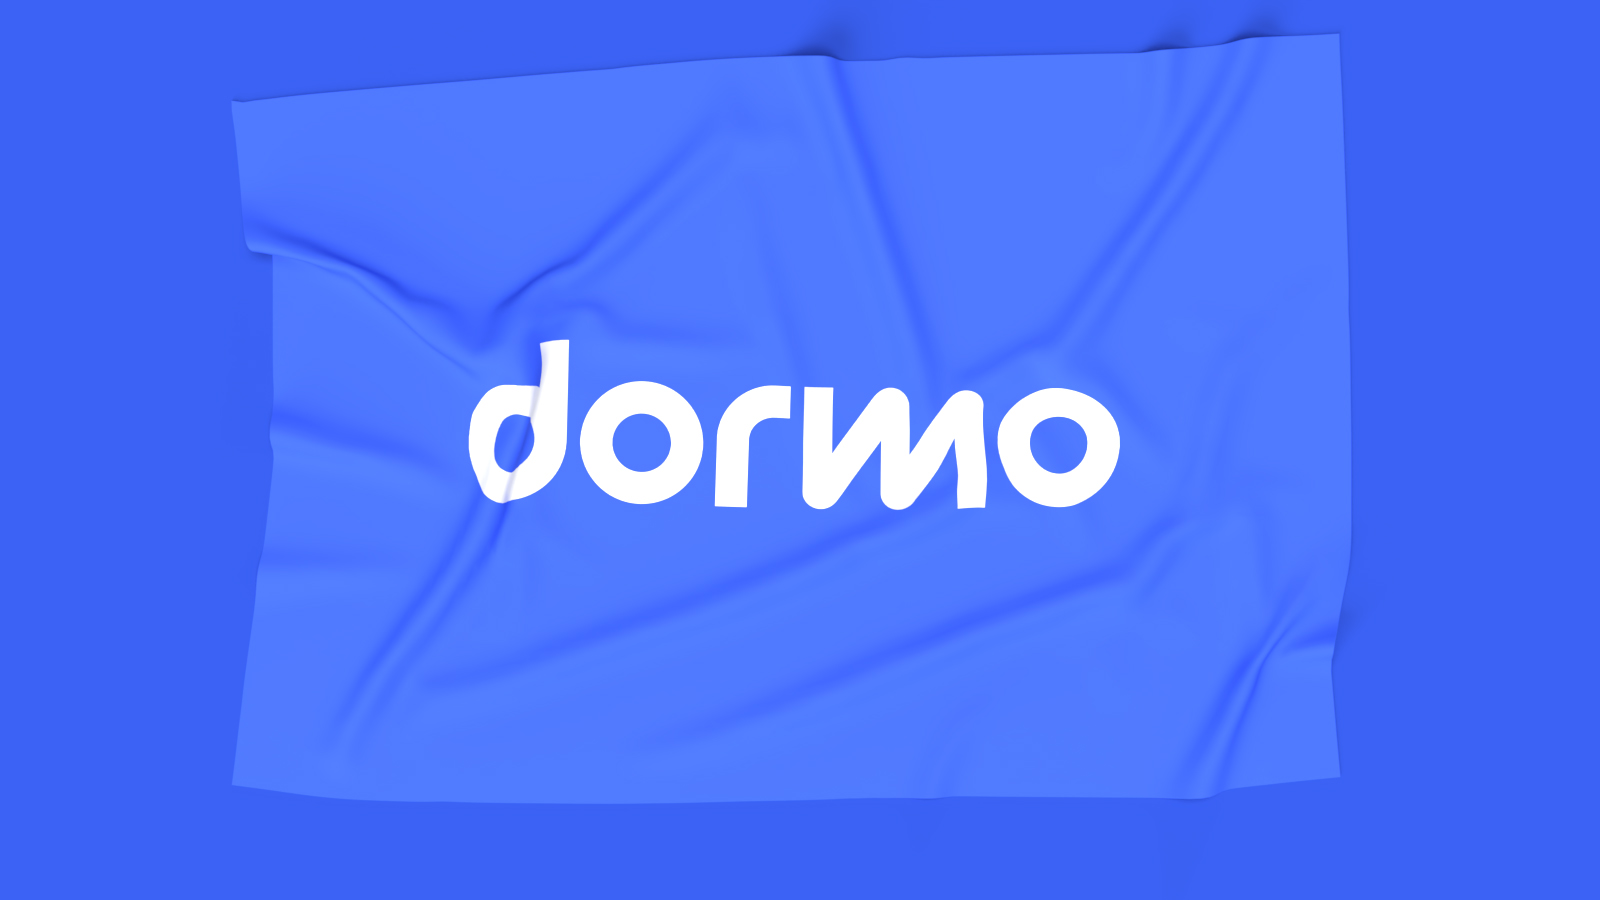 DORMO | Branding